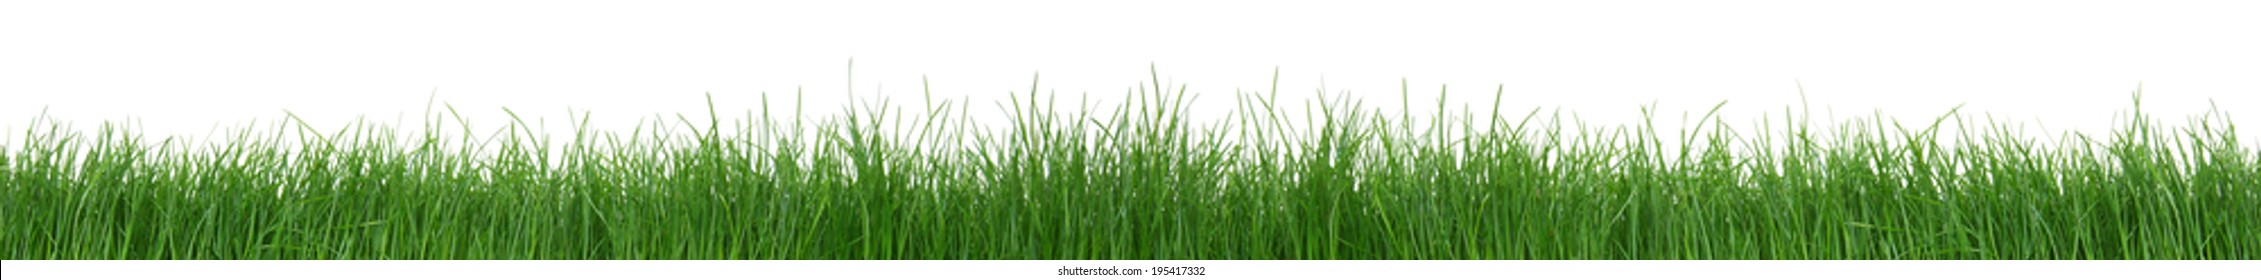 Green Grass On White Background 